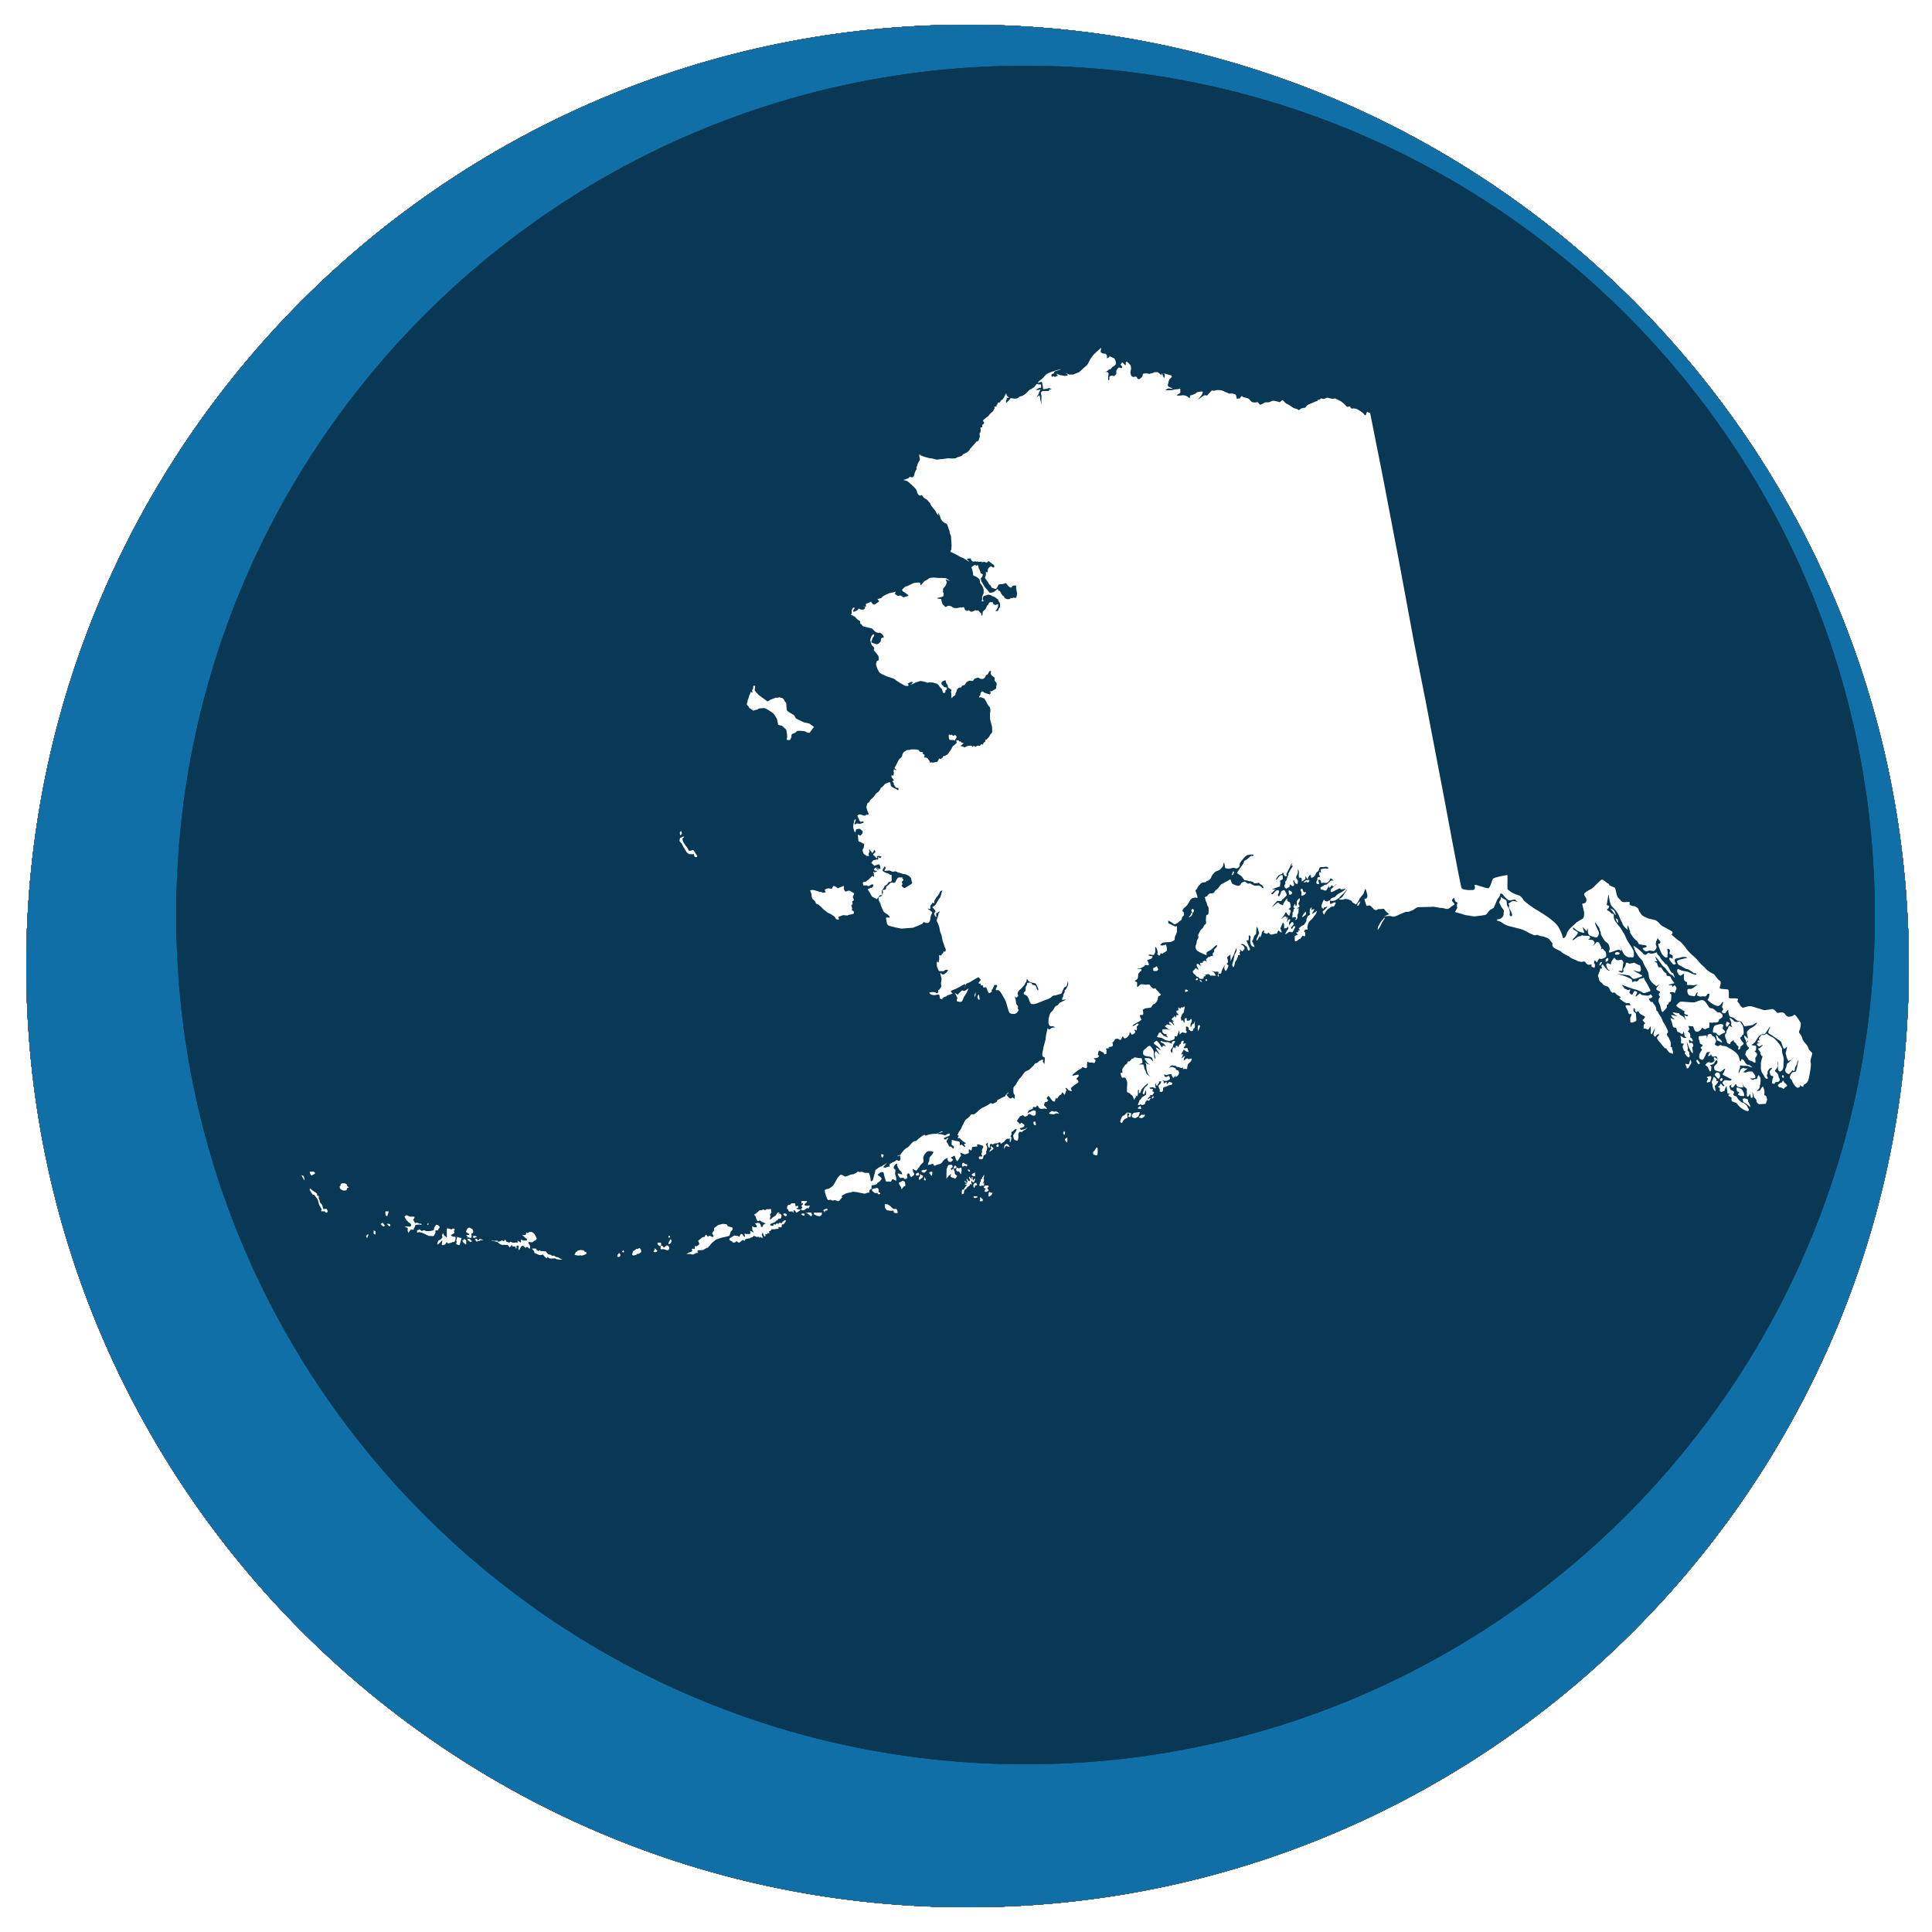 Alaska state shape in a circle